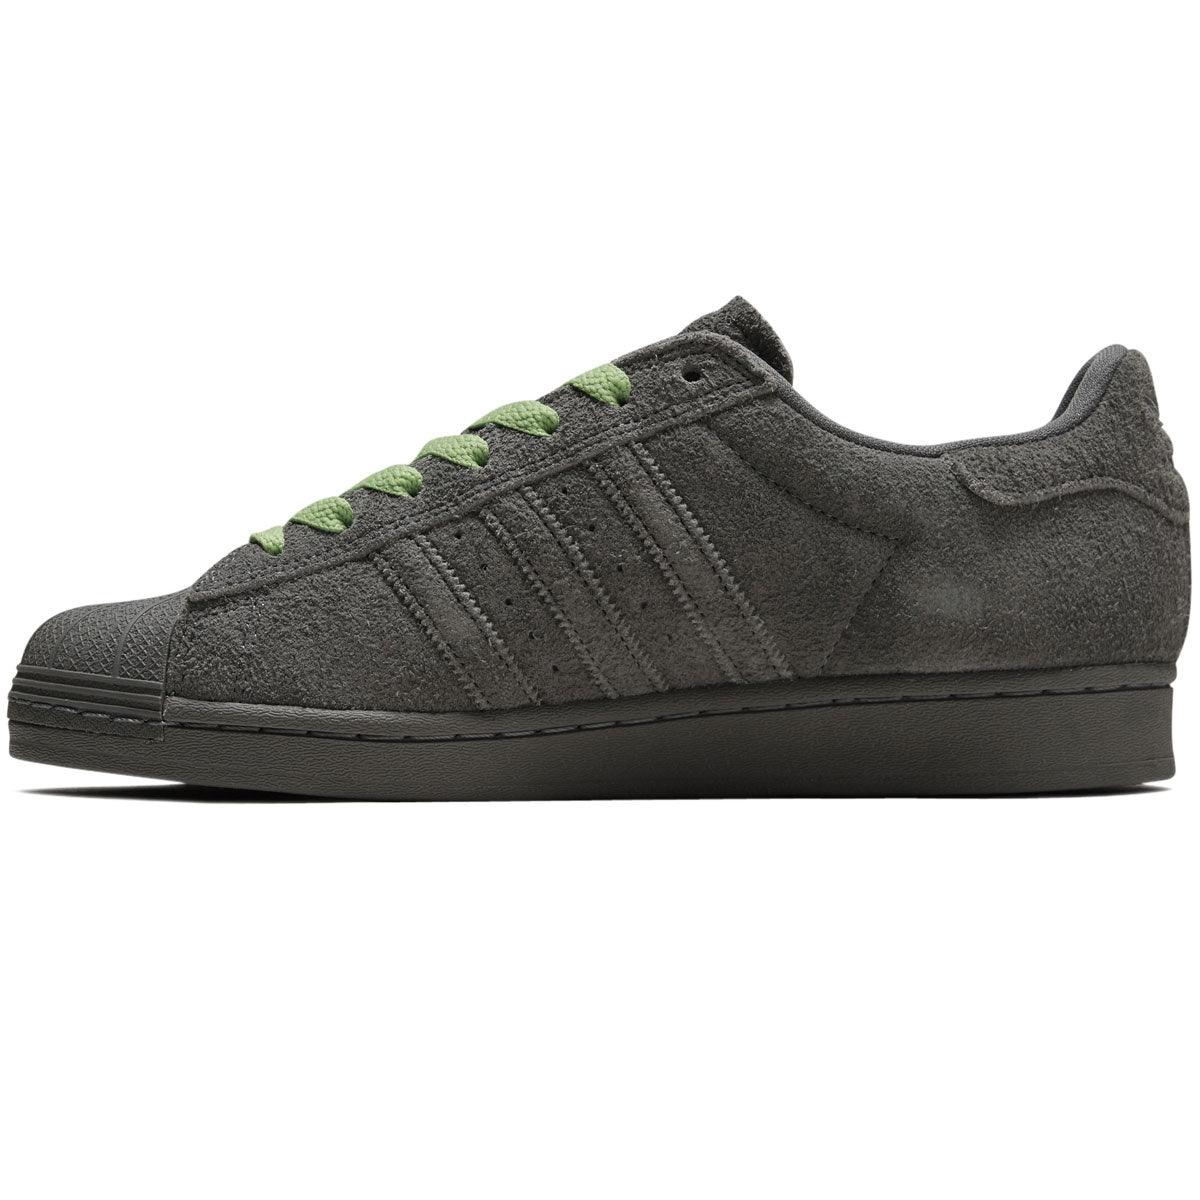 Adidas Superstar ADV Shoes - Grey/Grey/Core Black image 2